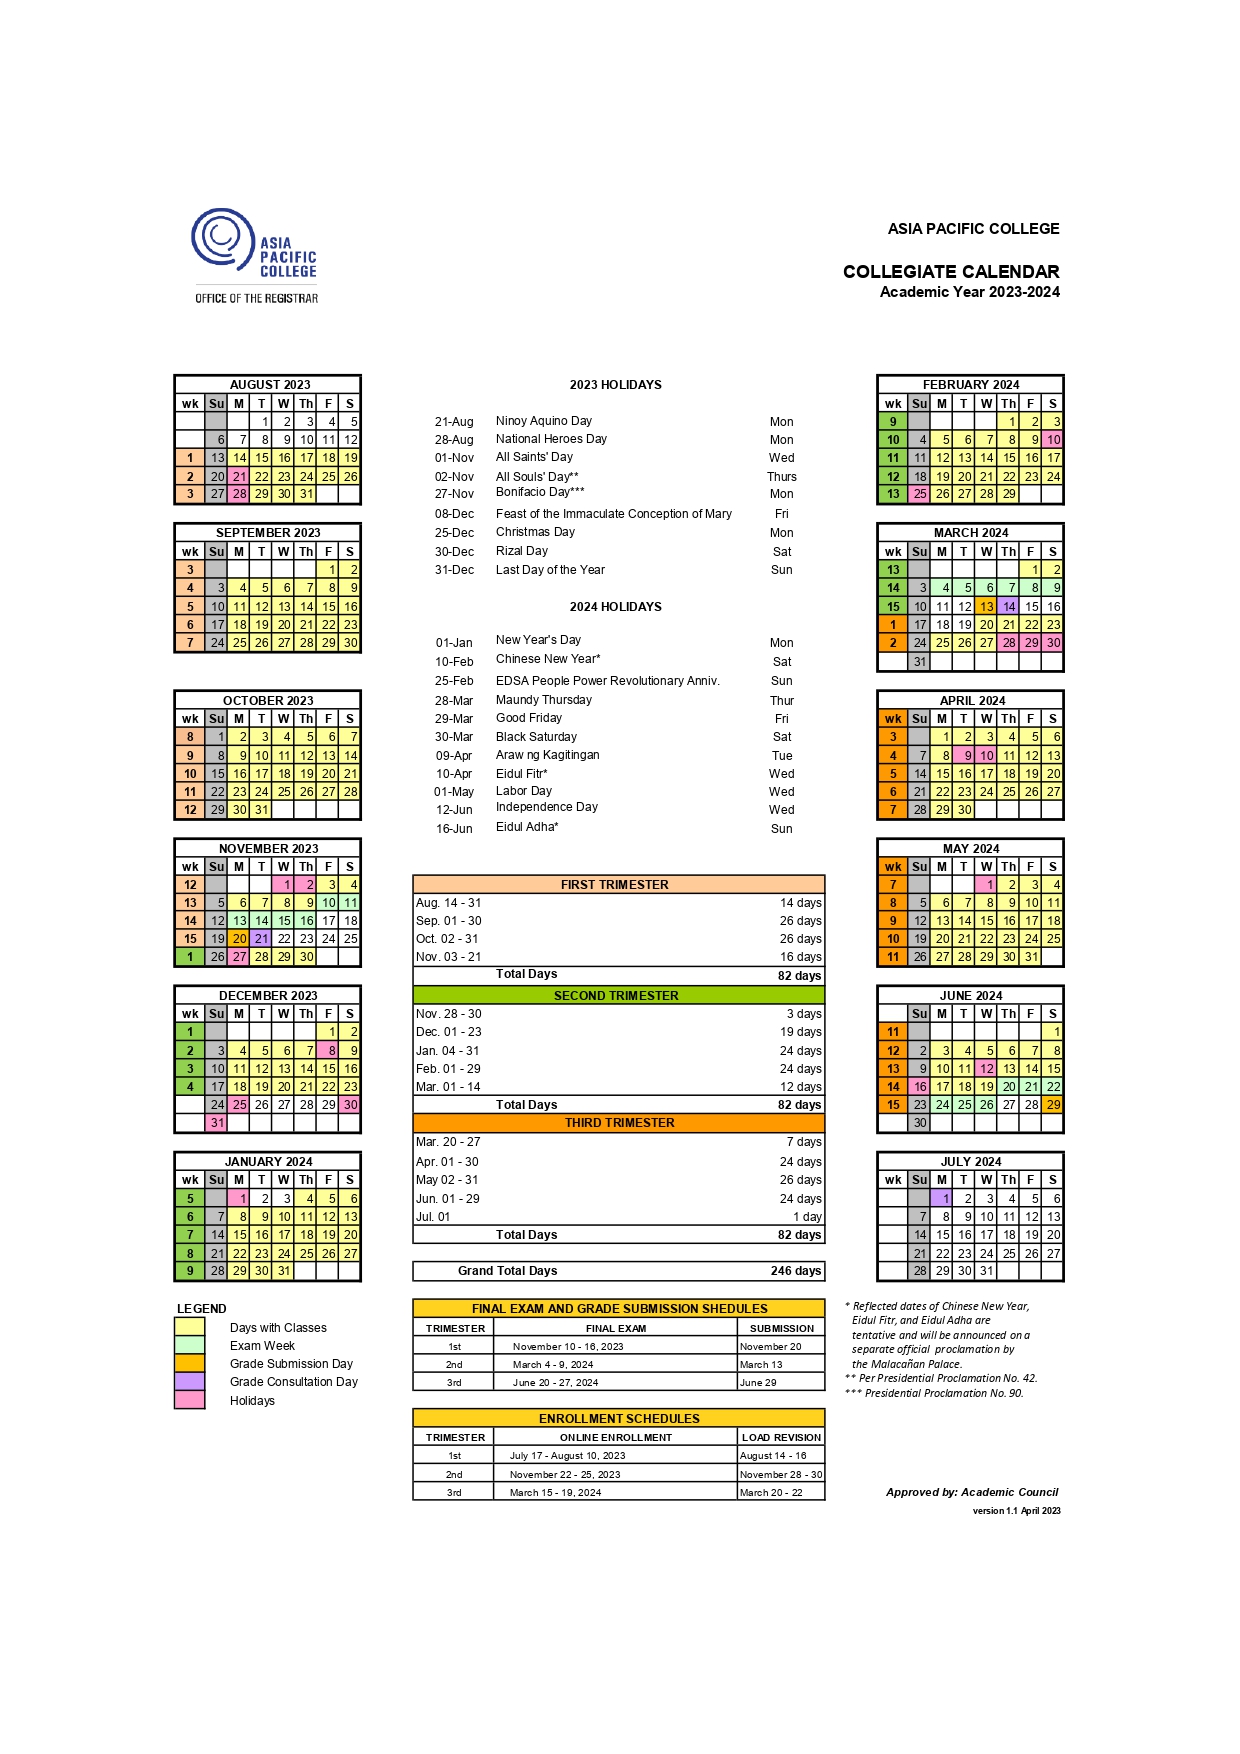 APC Collegiate Calendar 2023-24 v1.1._page-0001